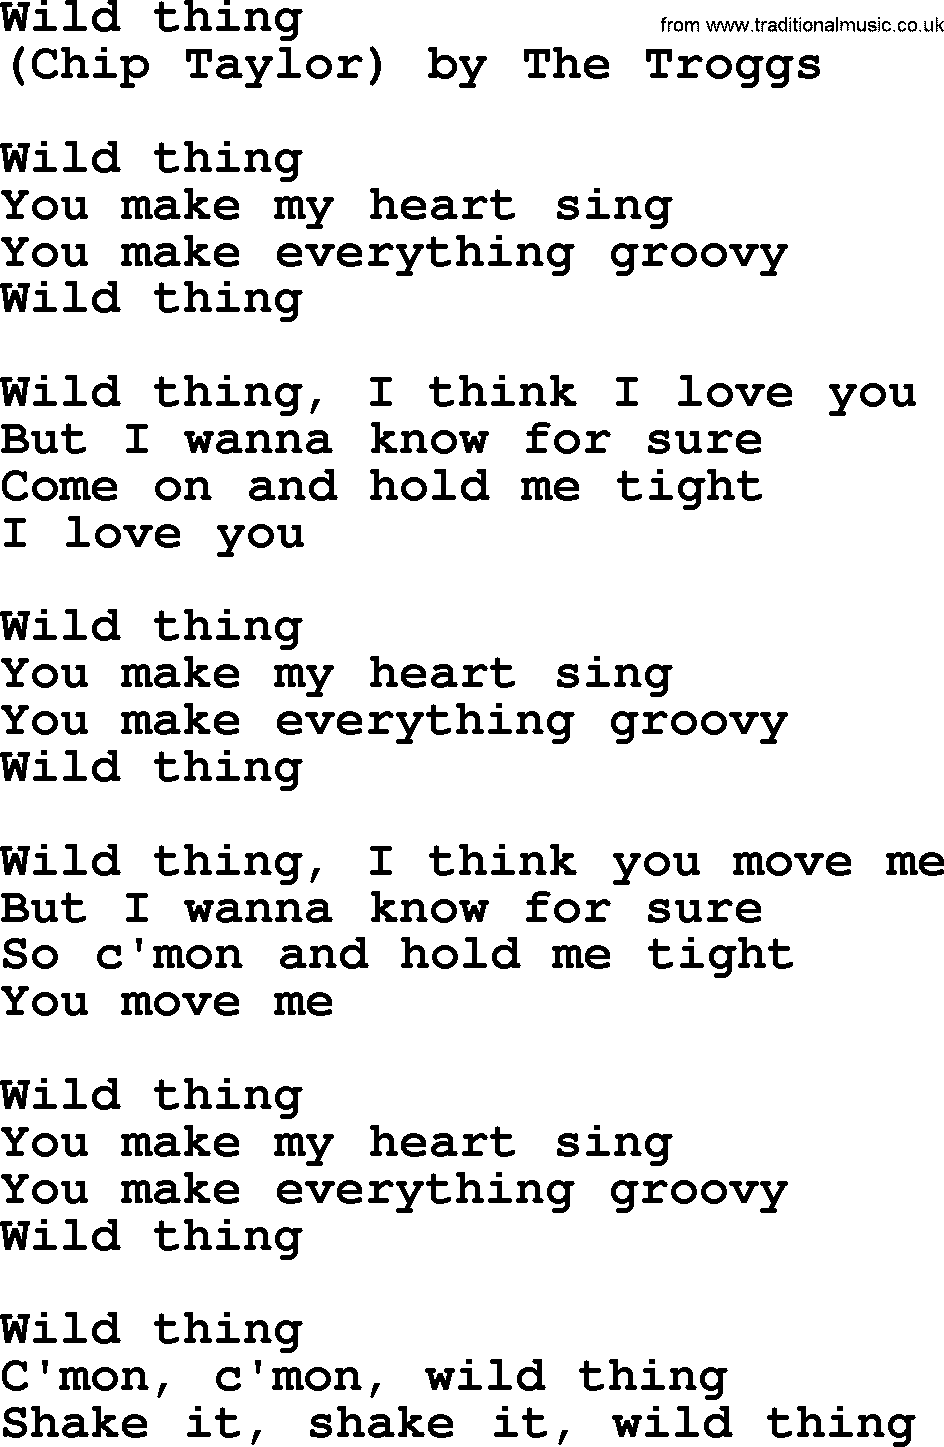 Bruce Springsteen song: Wild Thing lyrics